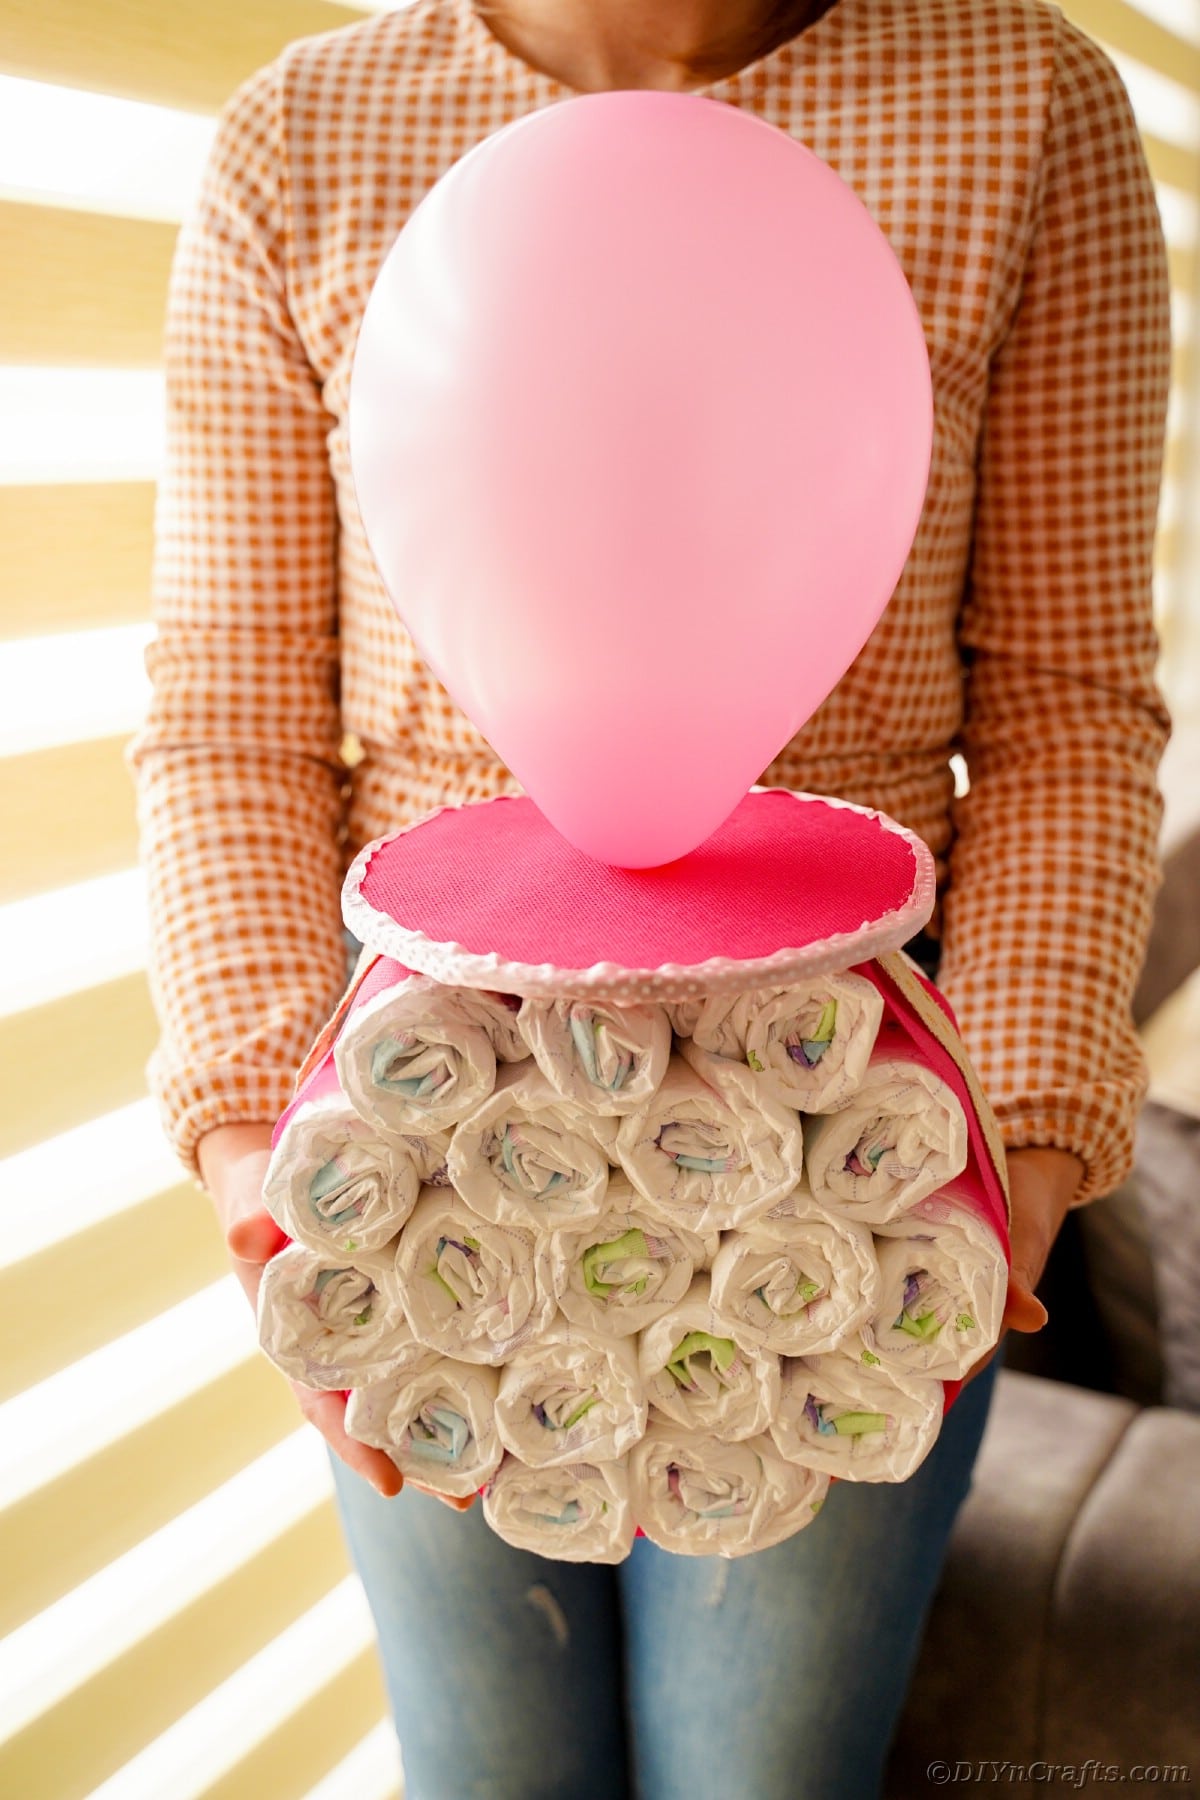 Woman holding pink balloon diaper cake 